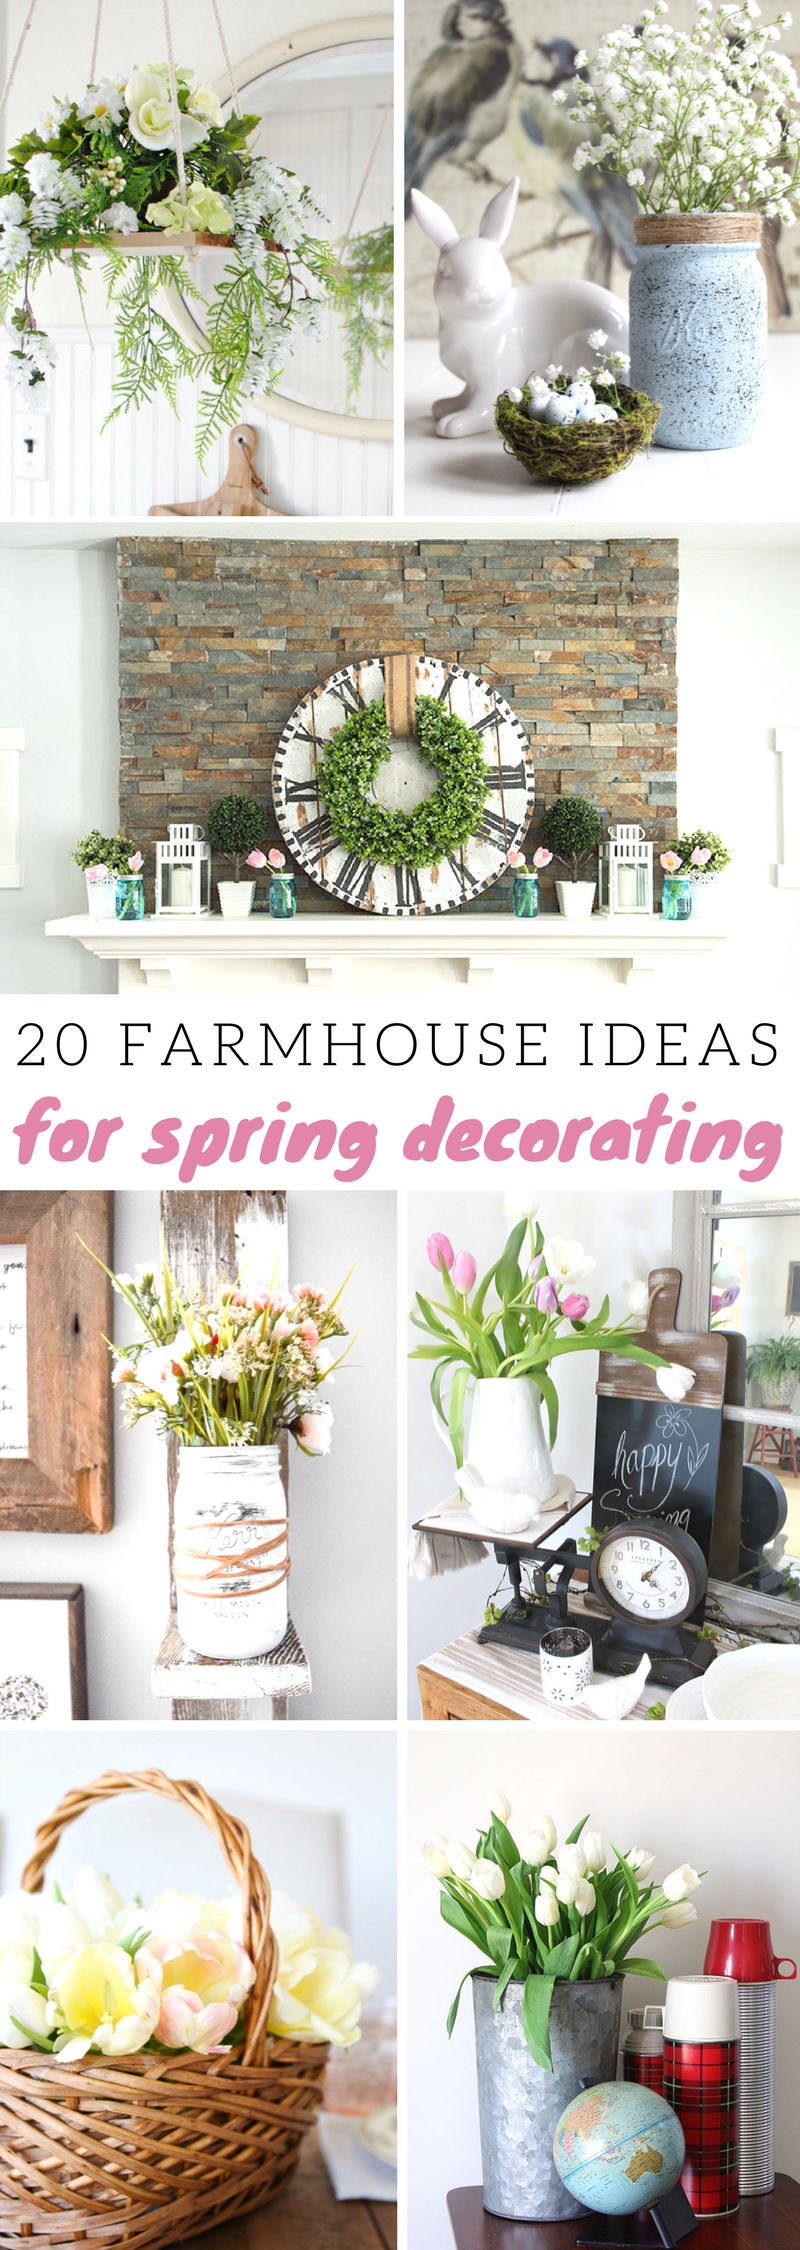 Farmhouse Ideas for Spring Decorating 